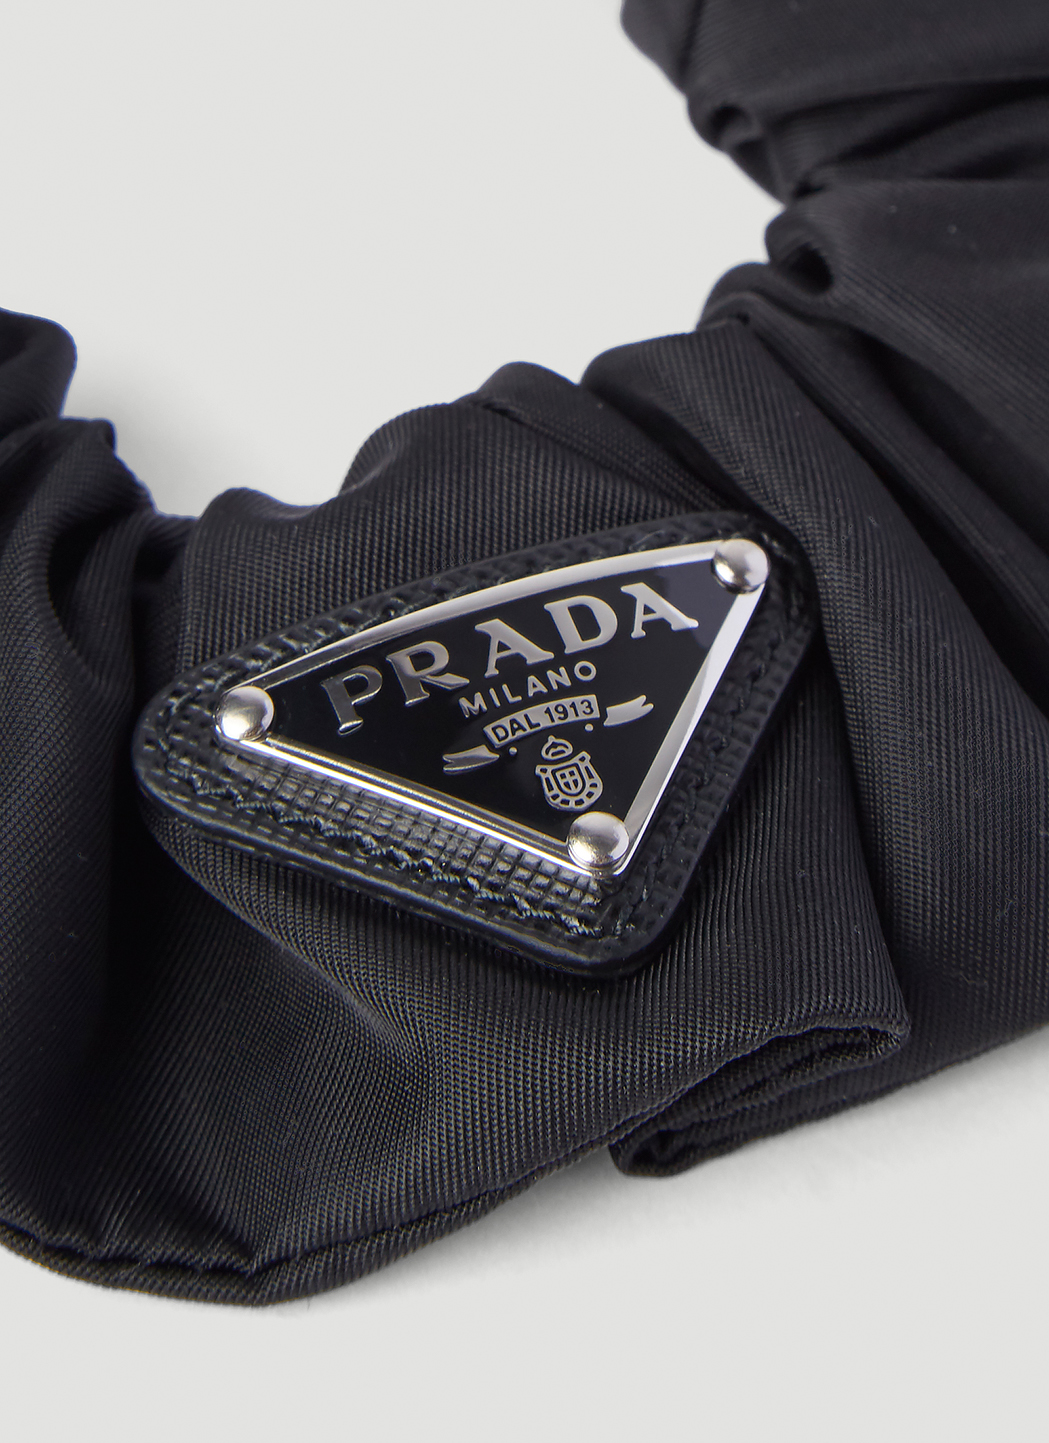 Prada Women's Re-Nylon Scrunchie in Black | LN-CC